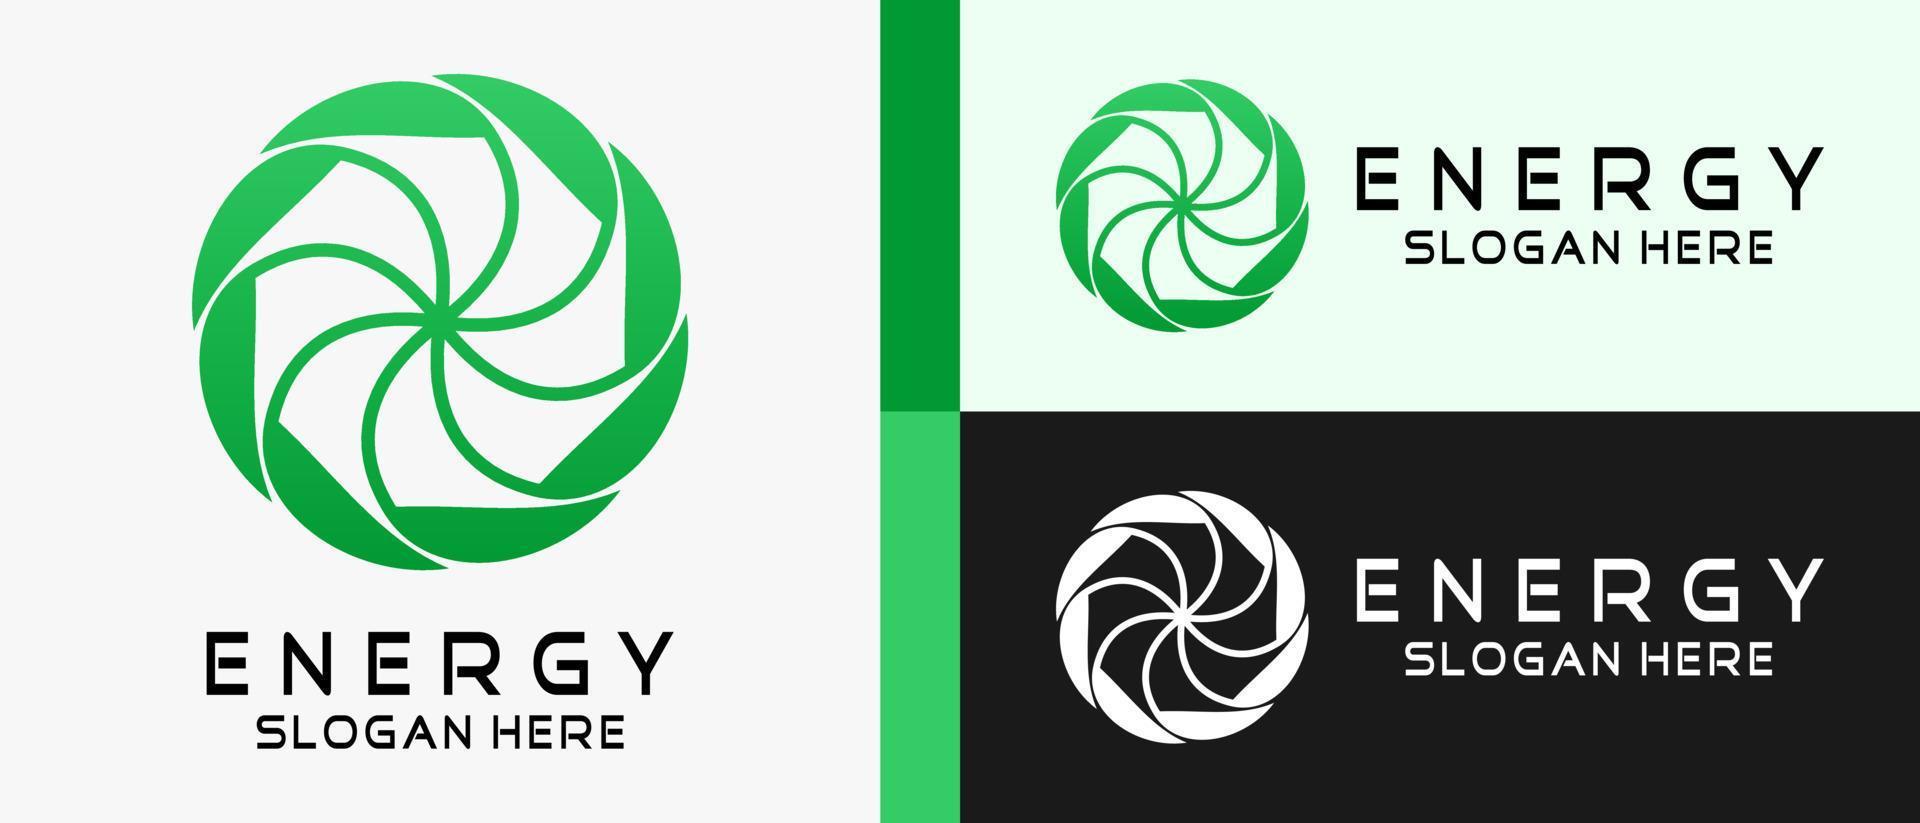 Energie-Logo-Design-Vorlage mit kreativem abstraktem Vortex-Konzept. Premium-Vektor-Logo-Illustration vektor